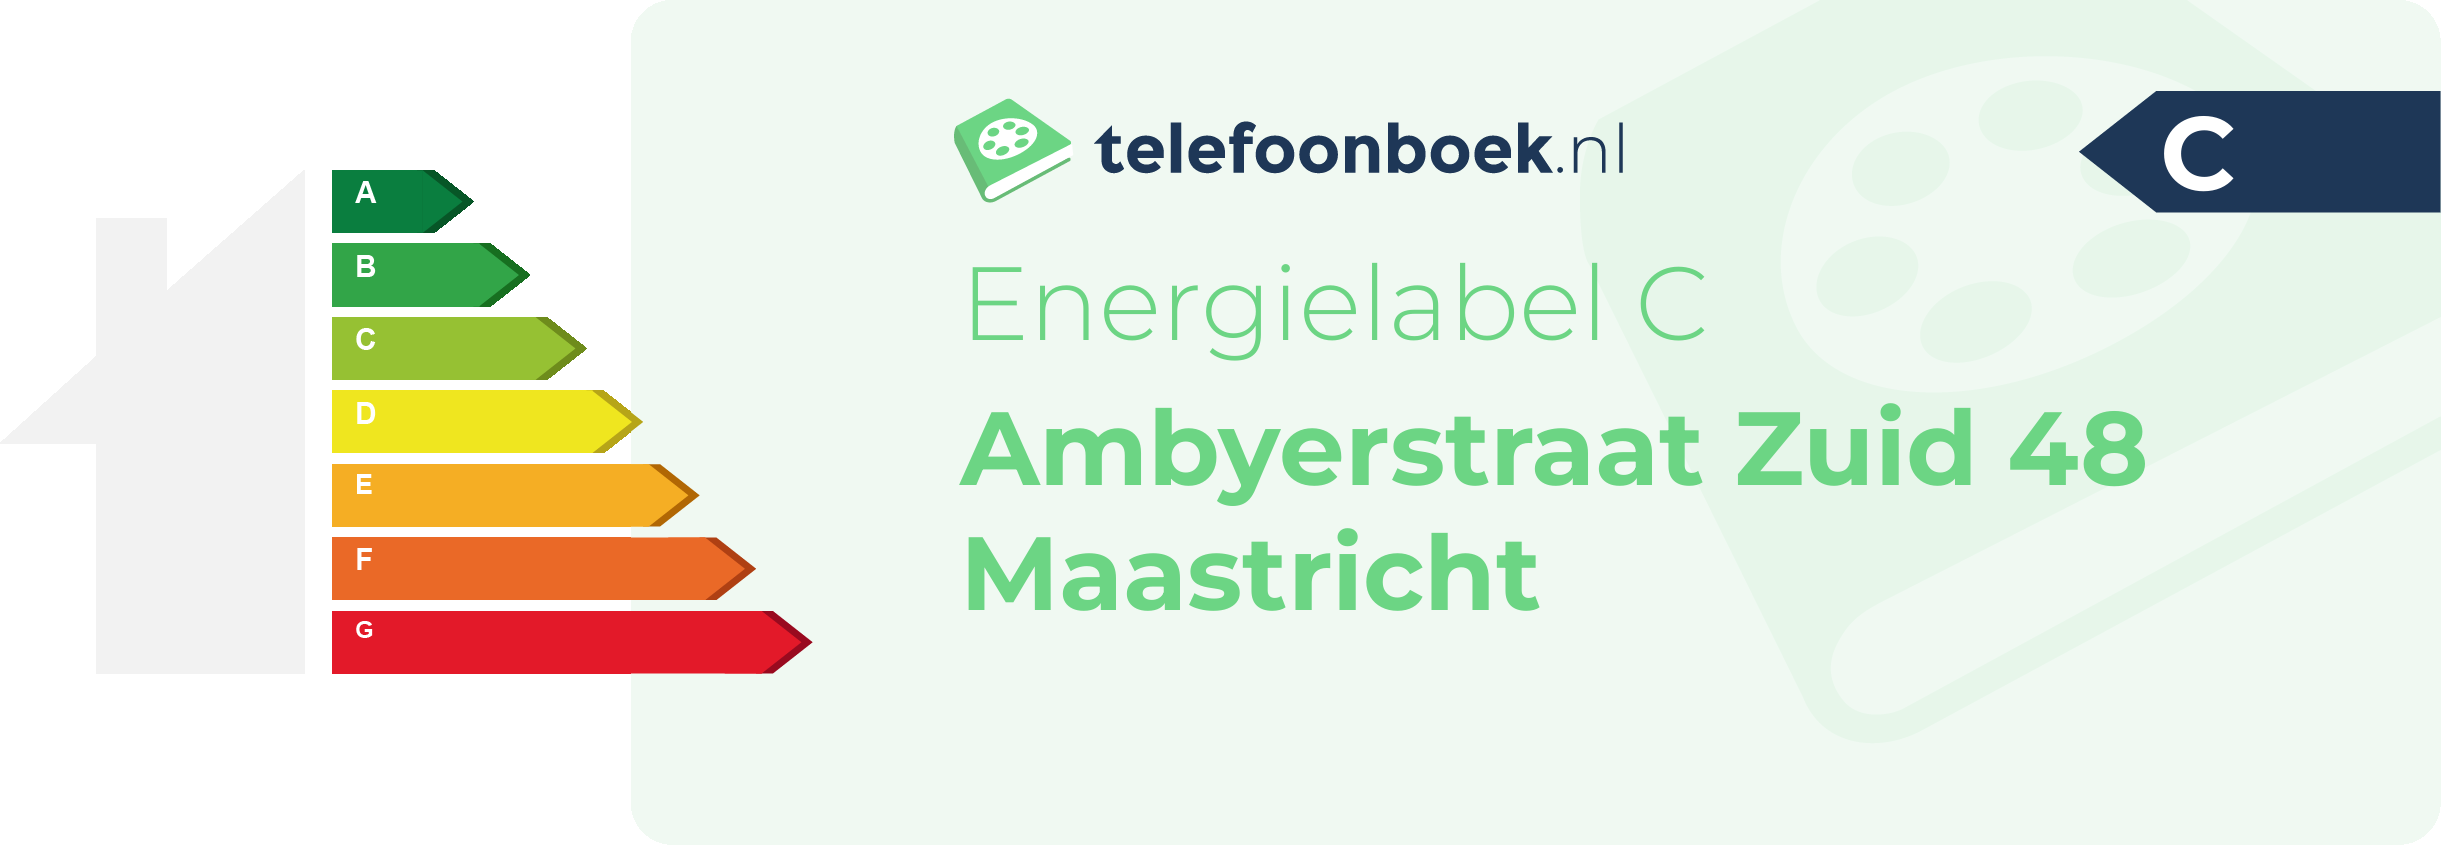 Energielabel Ambyerstraat Zuid 48 Maastricht